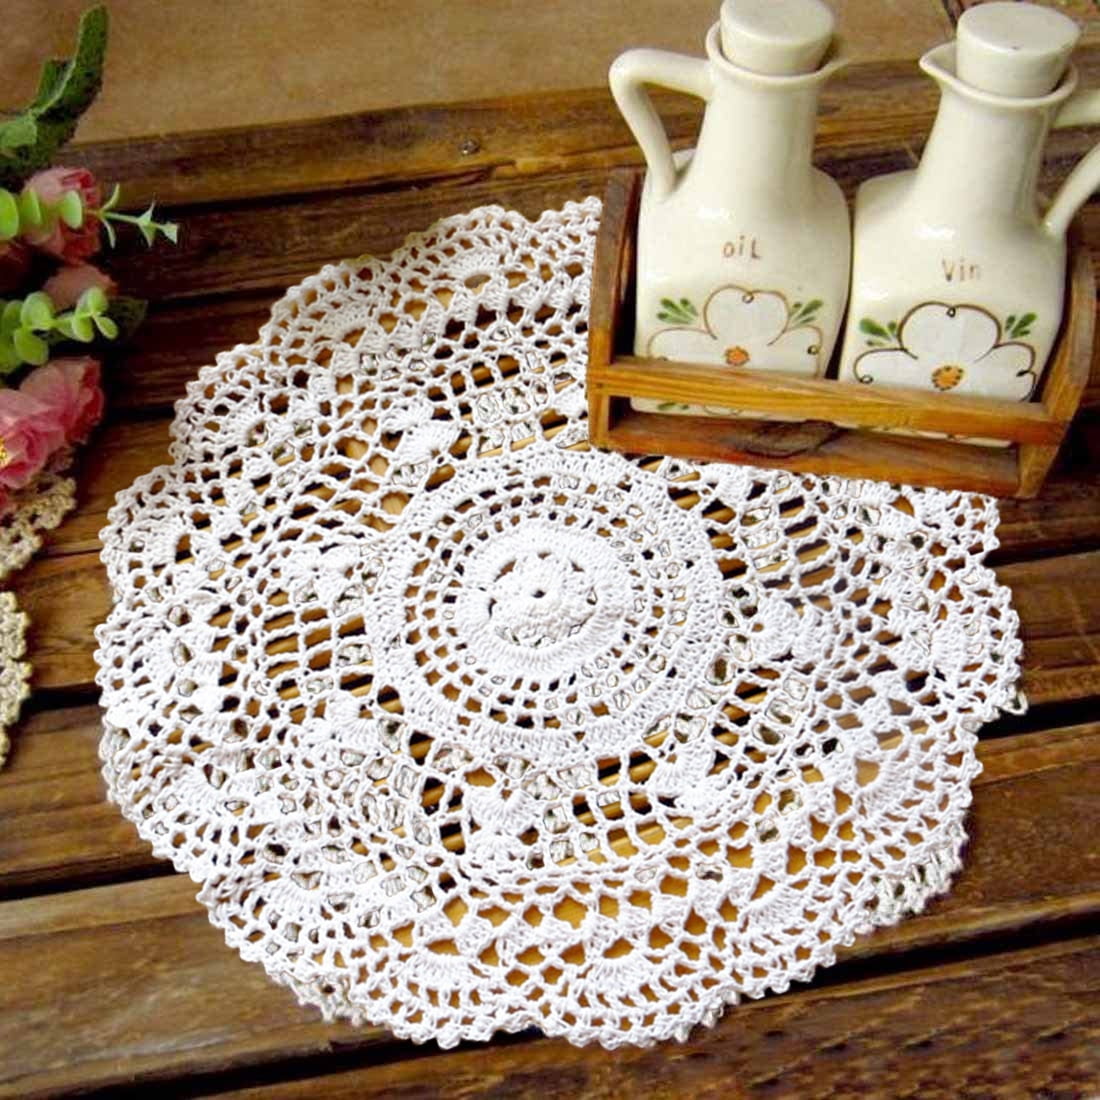 18" Round Crochet White Round Doily French Country Table Runner Flower Vase Mat 